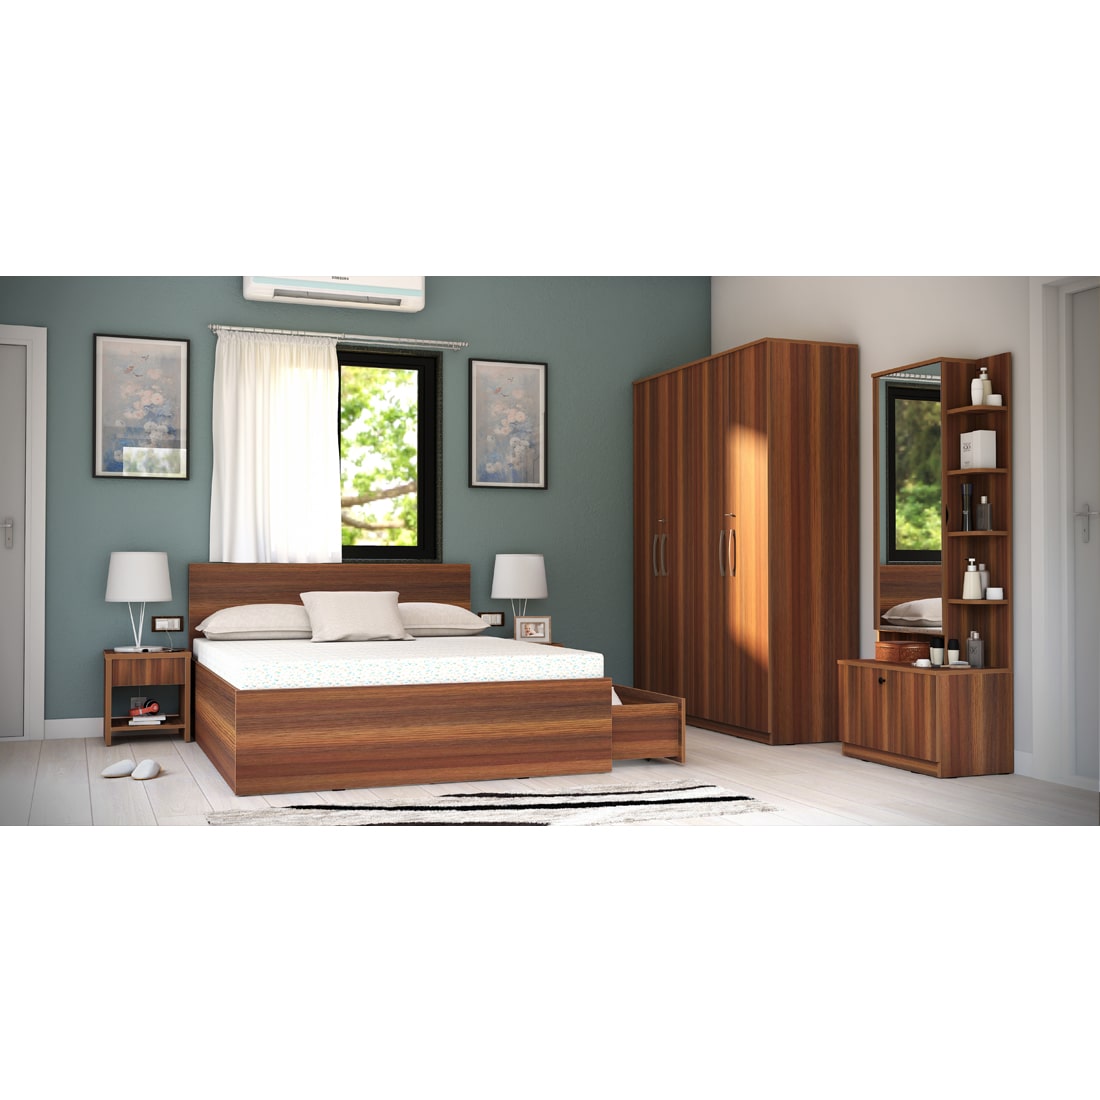 Modena 11: Set of 5 Bedroom Furniture - 4 door Wardrobe, Queen Bed Right, Dresser and Side Tables